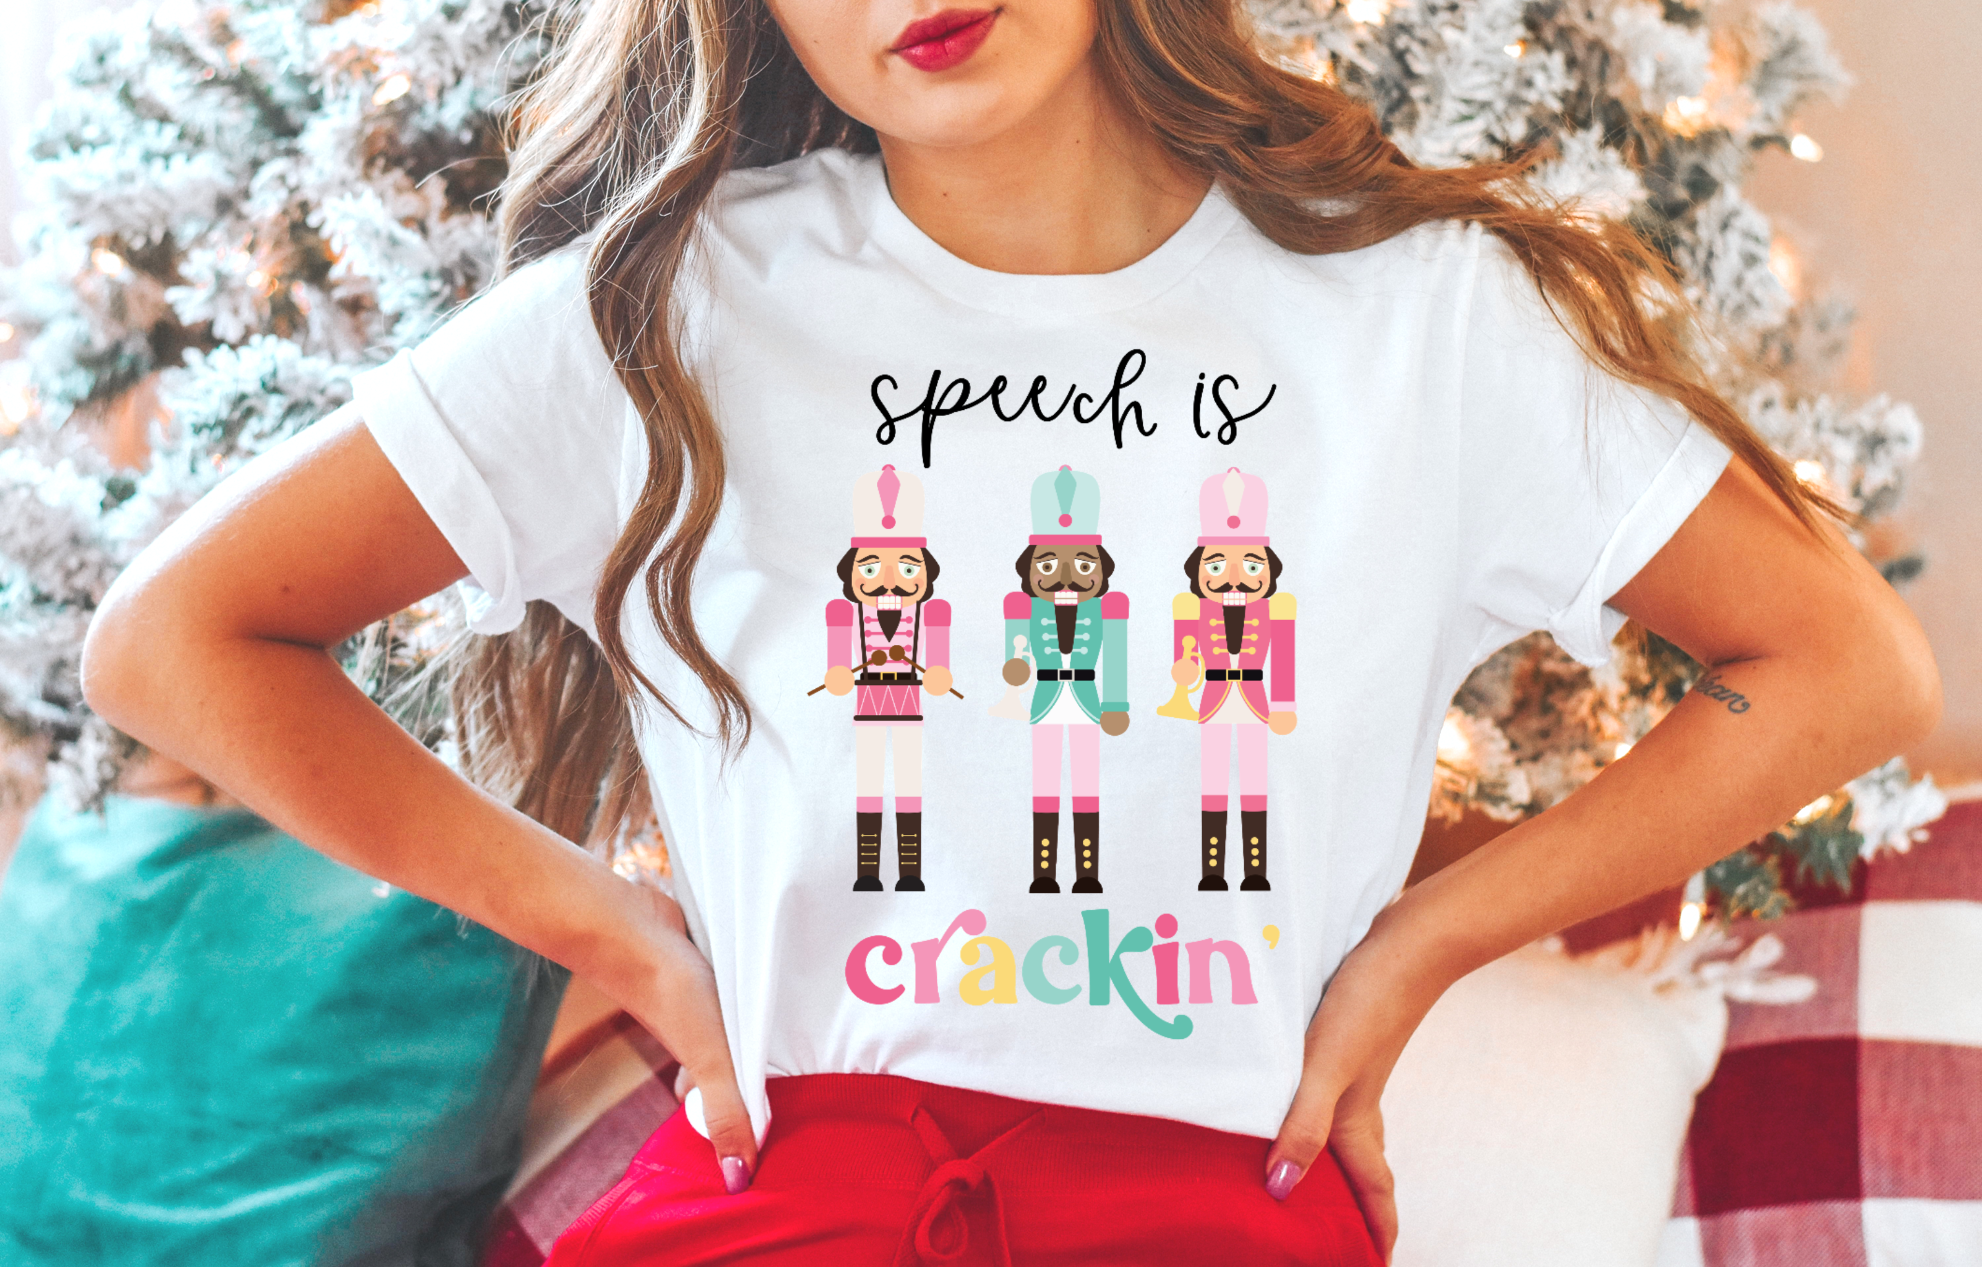 Speech is Crackin’ Tee